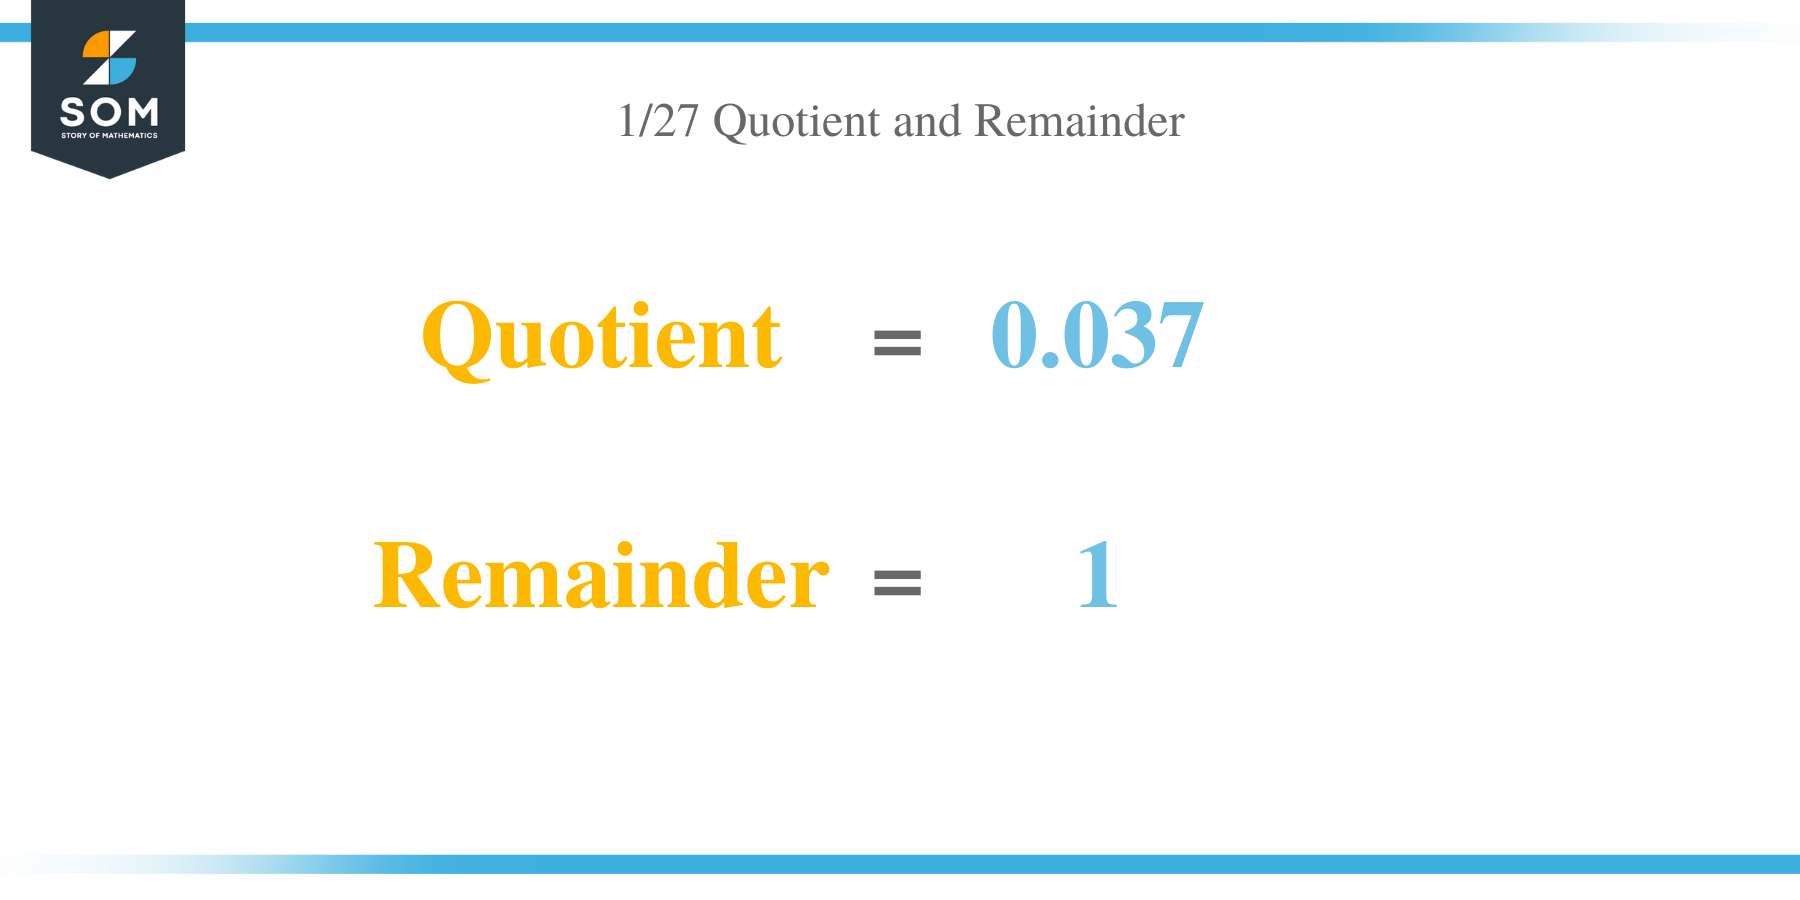 Quotient and Remainder of 1 per 27